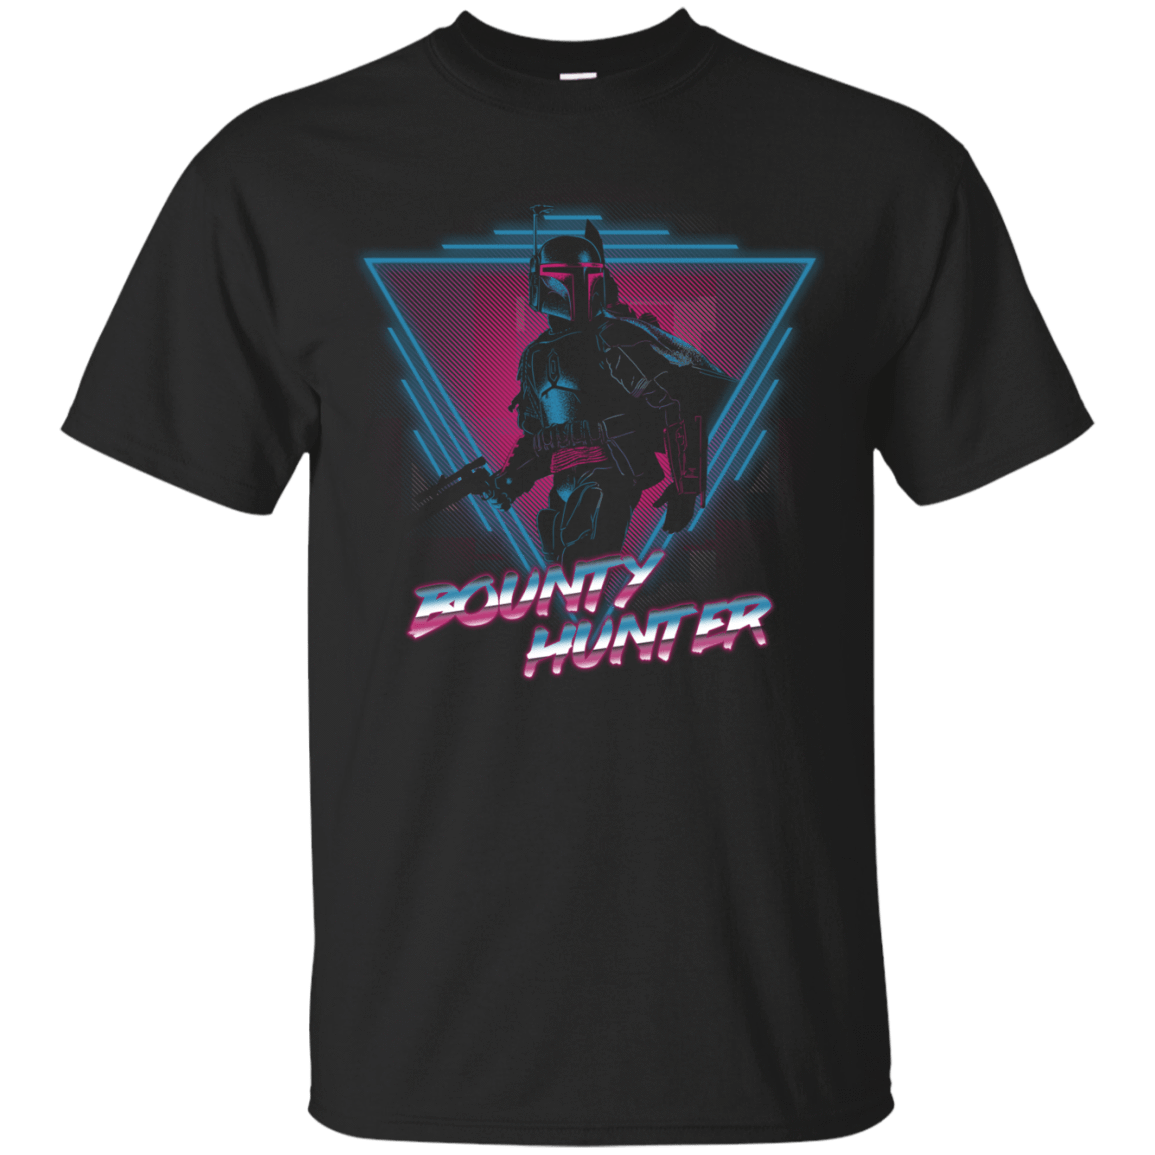 T-Shirts Black / Small Bounty Hunter (1) T-Shirt